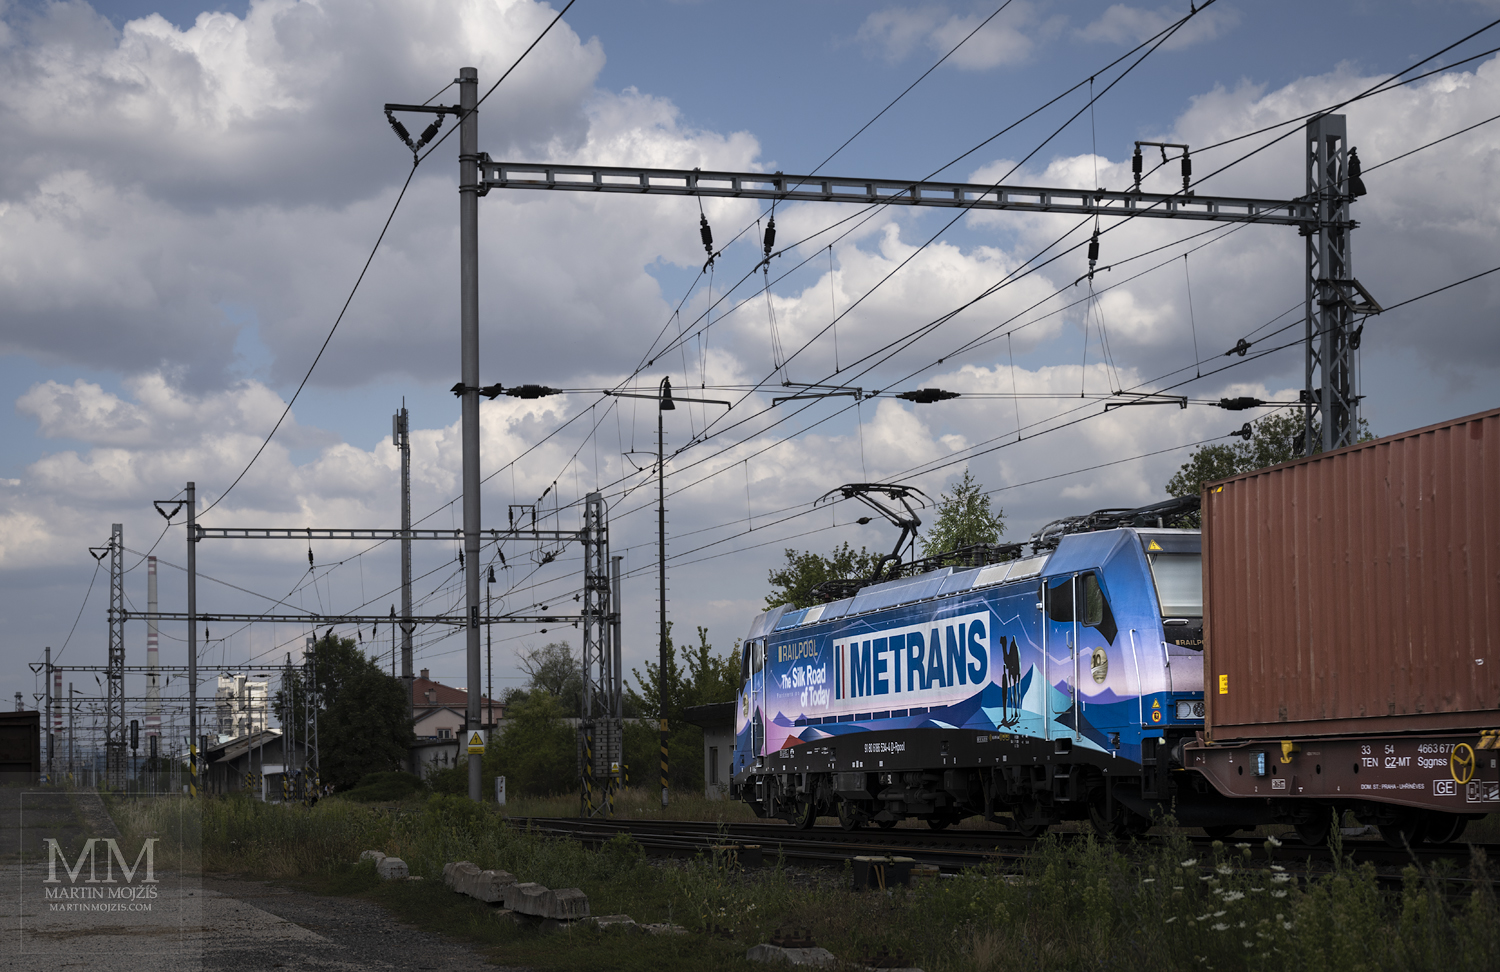 Nákladní kontejnerový vlak firmy Metrans, v čele lokomotiva Bombardier Traxx s grafikou Silk Road of Today (Hedvábná stezka dneška).